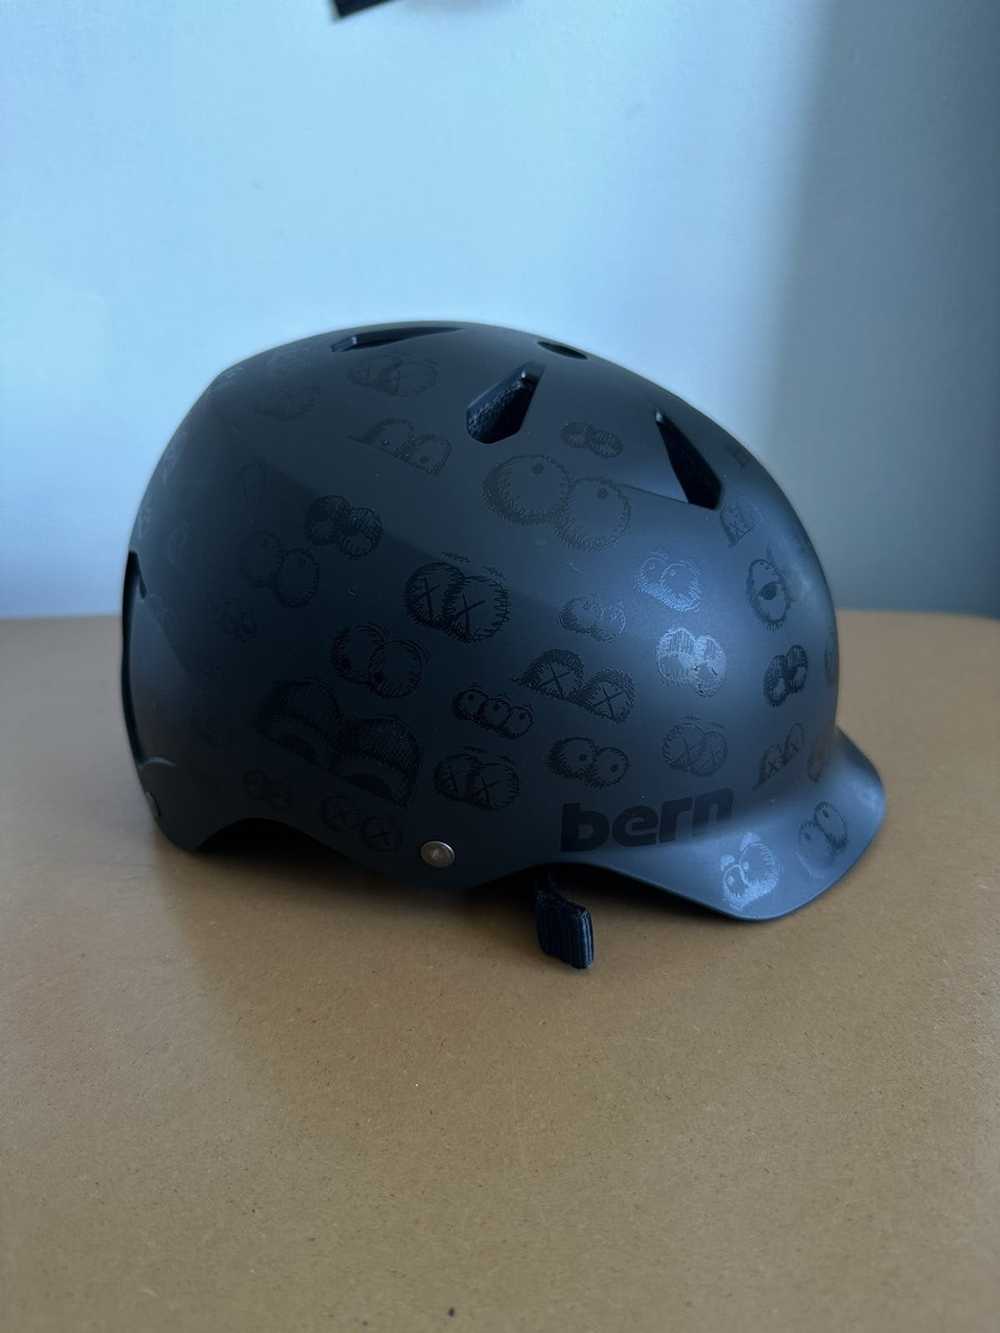 Kaws KAWS x Bern Limited Edition Helmet for New M… - image 1